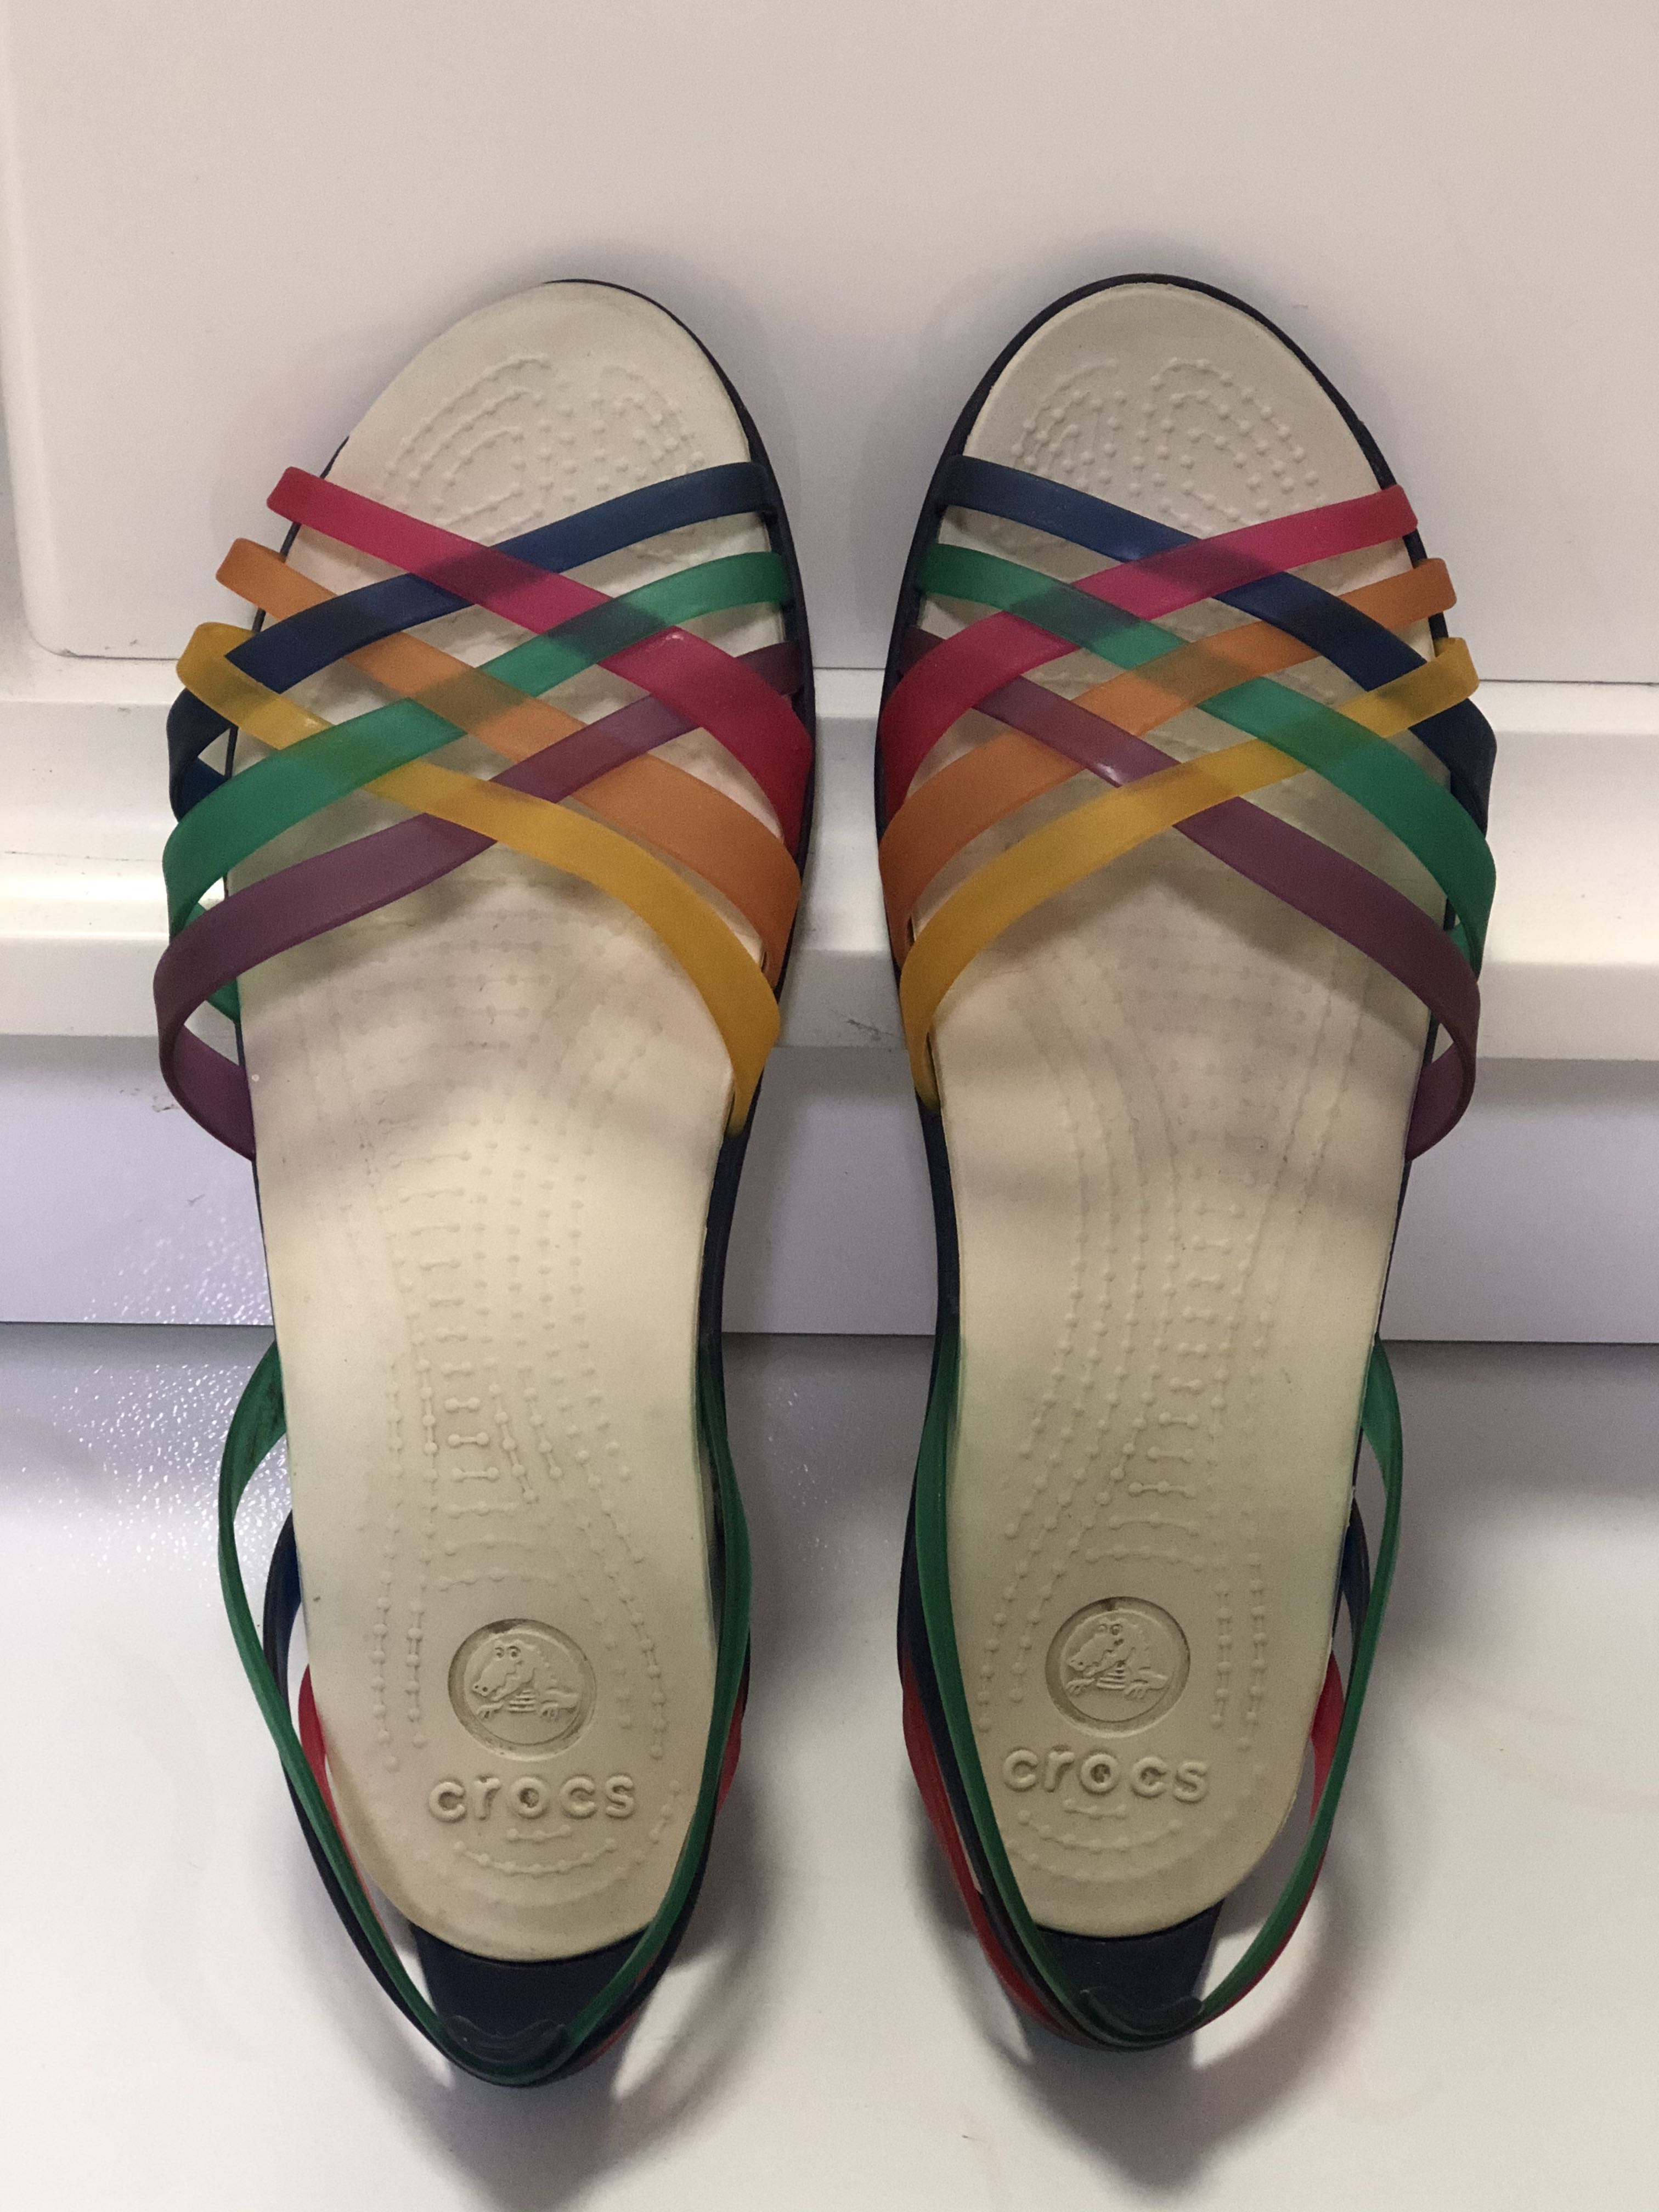 CROCS Literide 360 marbled sandal US - Women's Size 8 | eBay